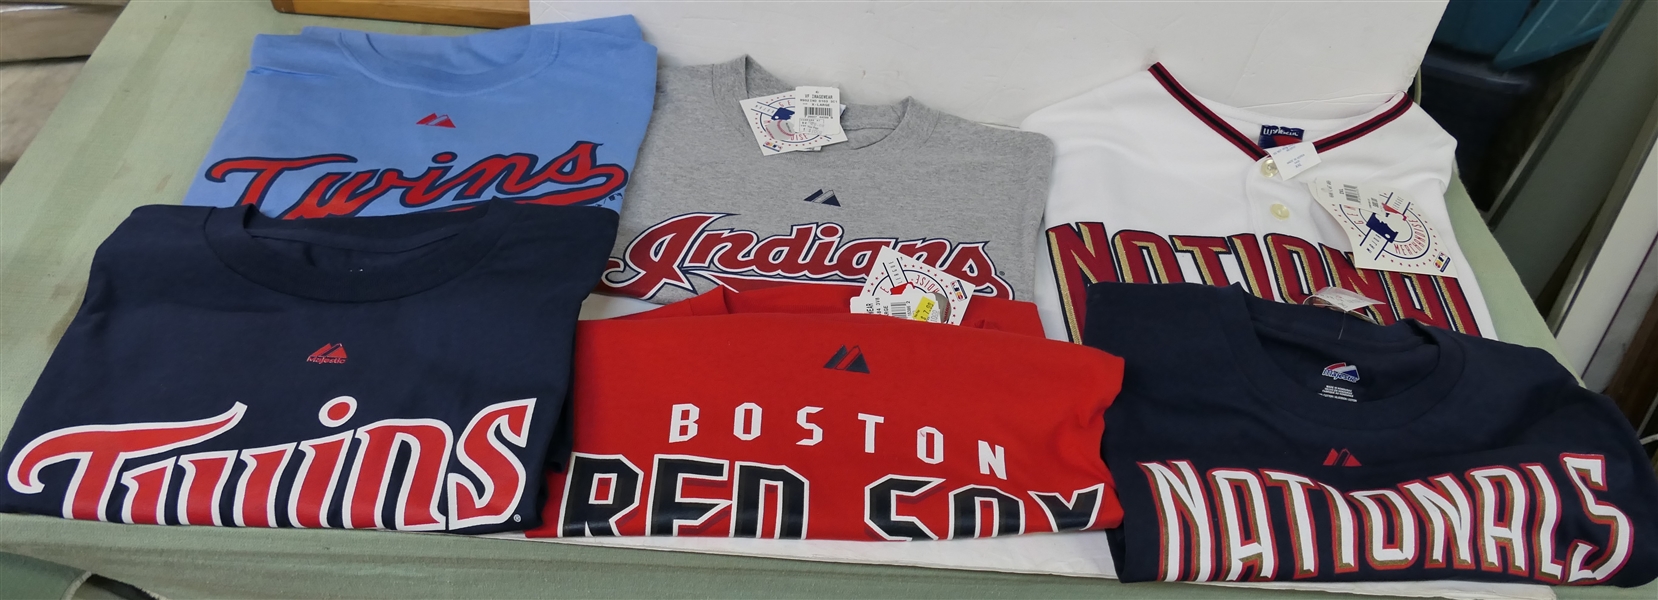 6 Baseball Shirts - New Old Stock - Nationals Jersey Size 2XL, Nationals XL, Indians XL, Red Sox XL, Twins XL, and Twins XL